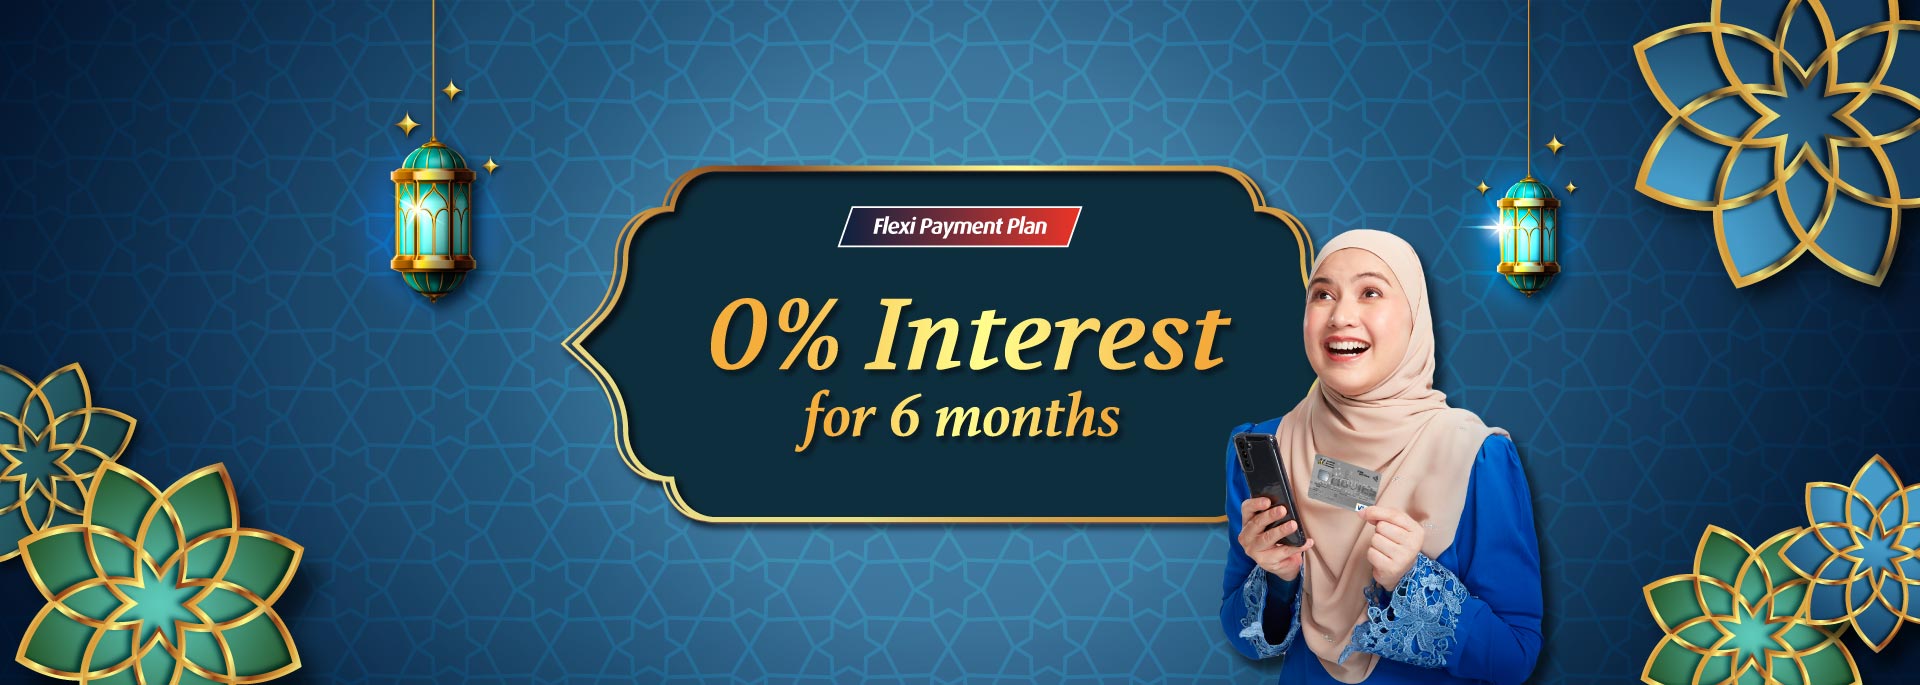 Flexi Payment Plan 0% Interest for 6 months